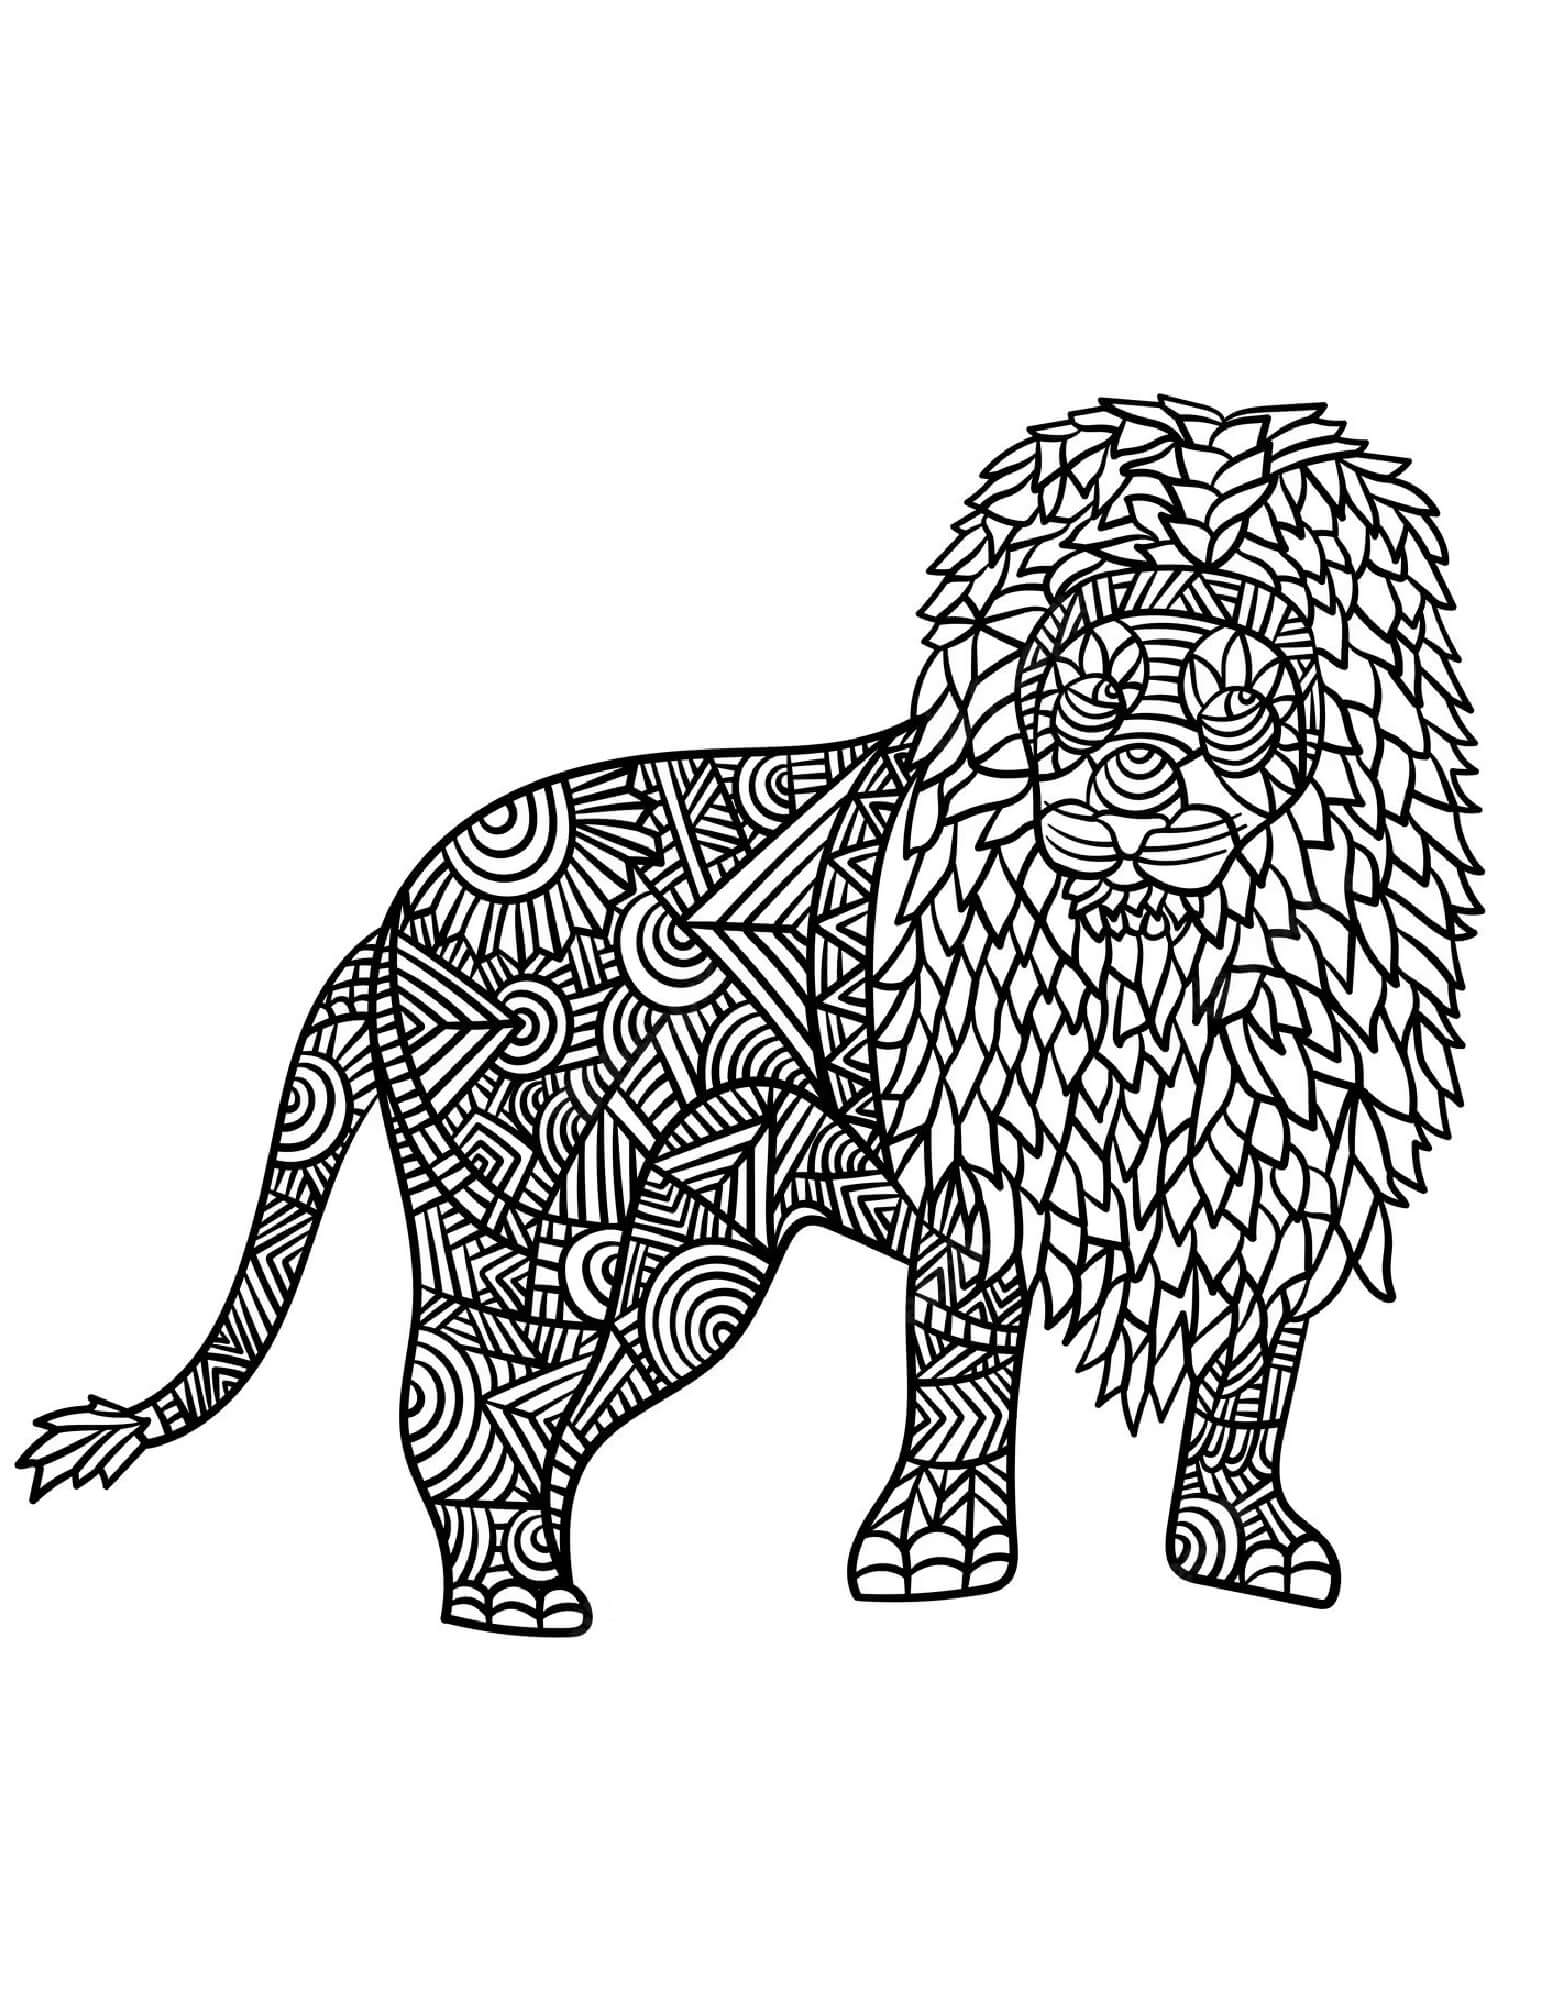 Mandala Cool Lion Coloring Page Mandala